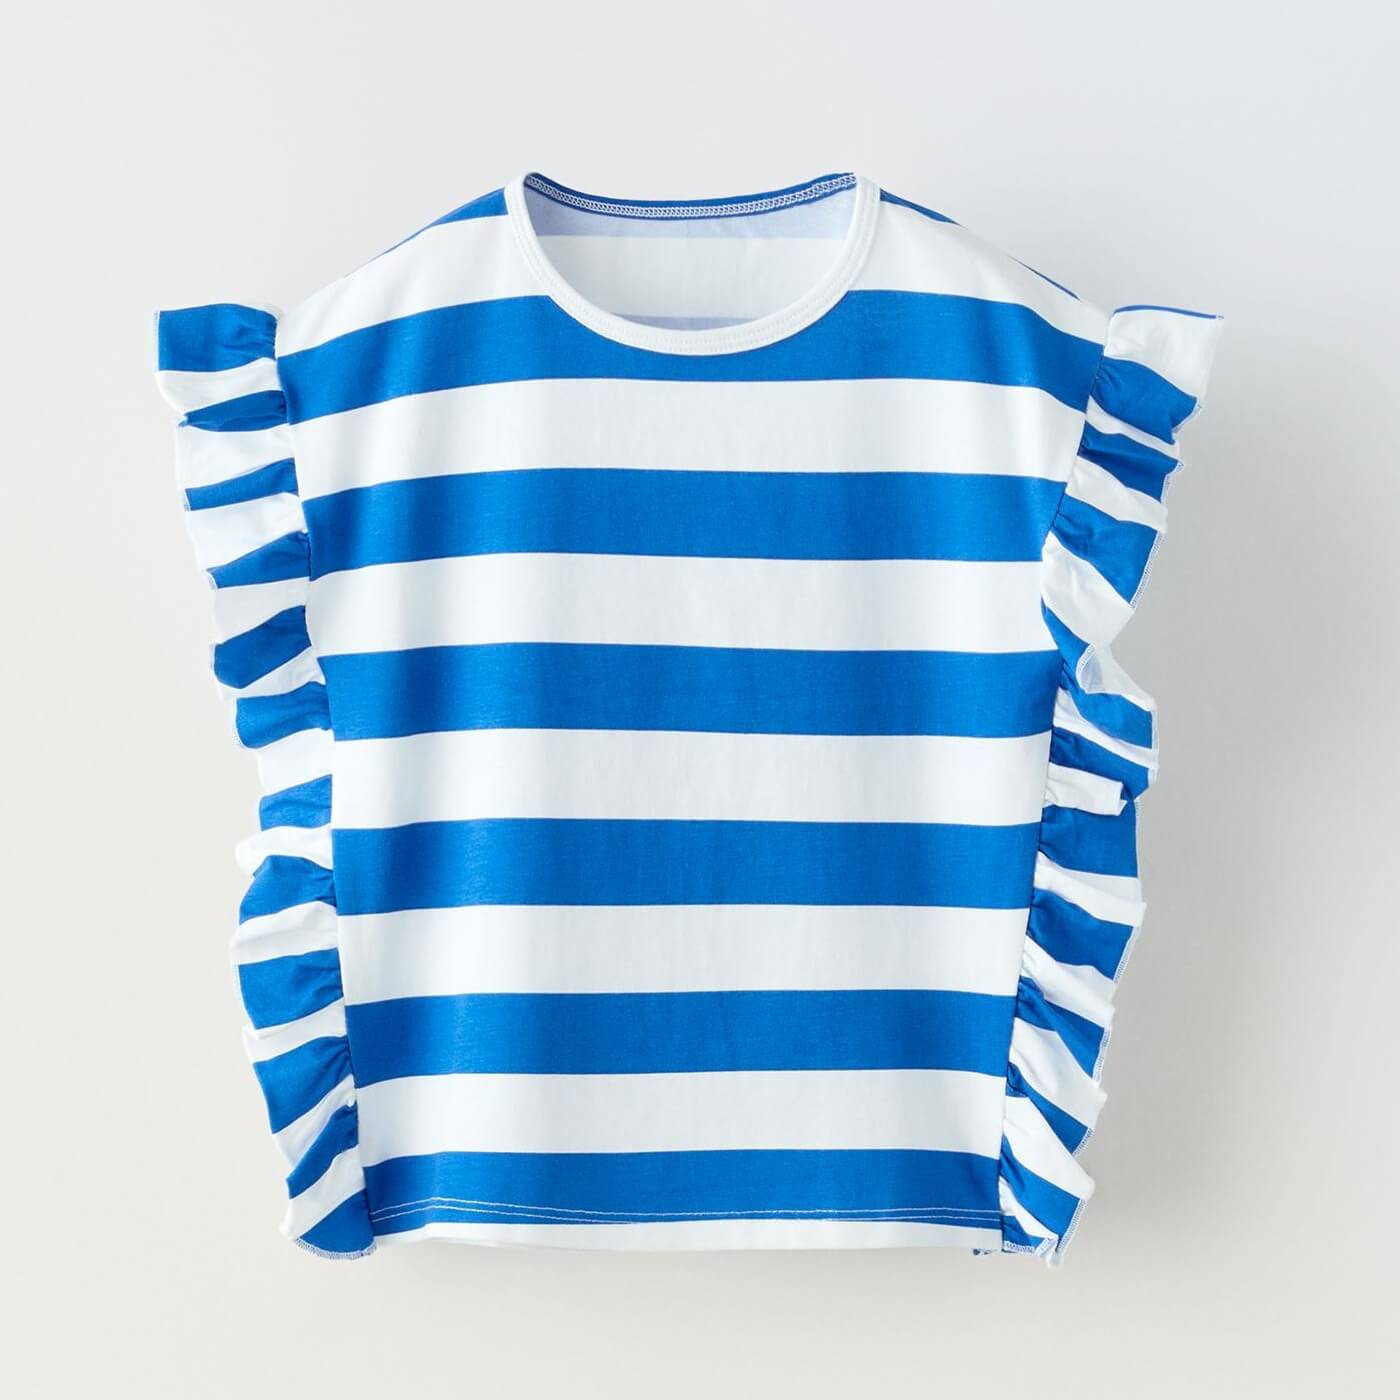 Футболка Zara Striped With Ruffle Trims, синий/белый футболка zara with contrast trims белый зеленый